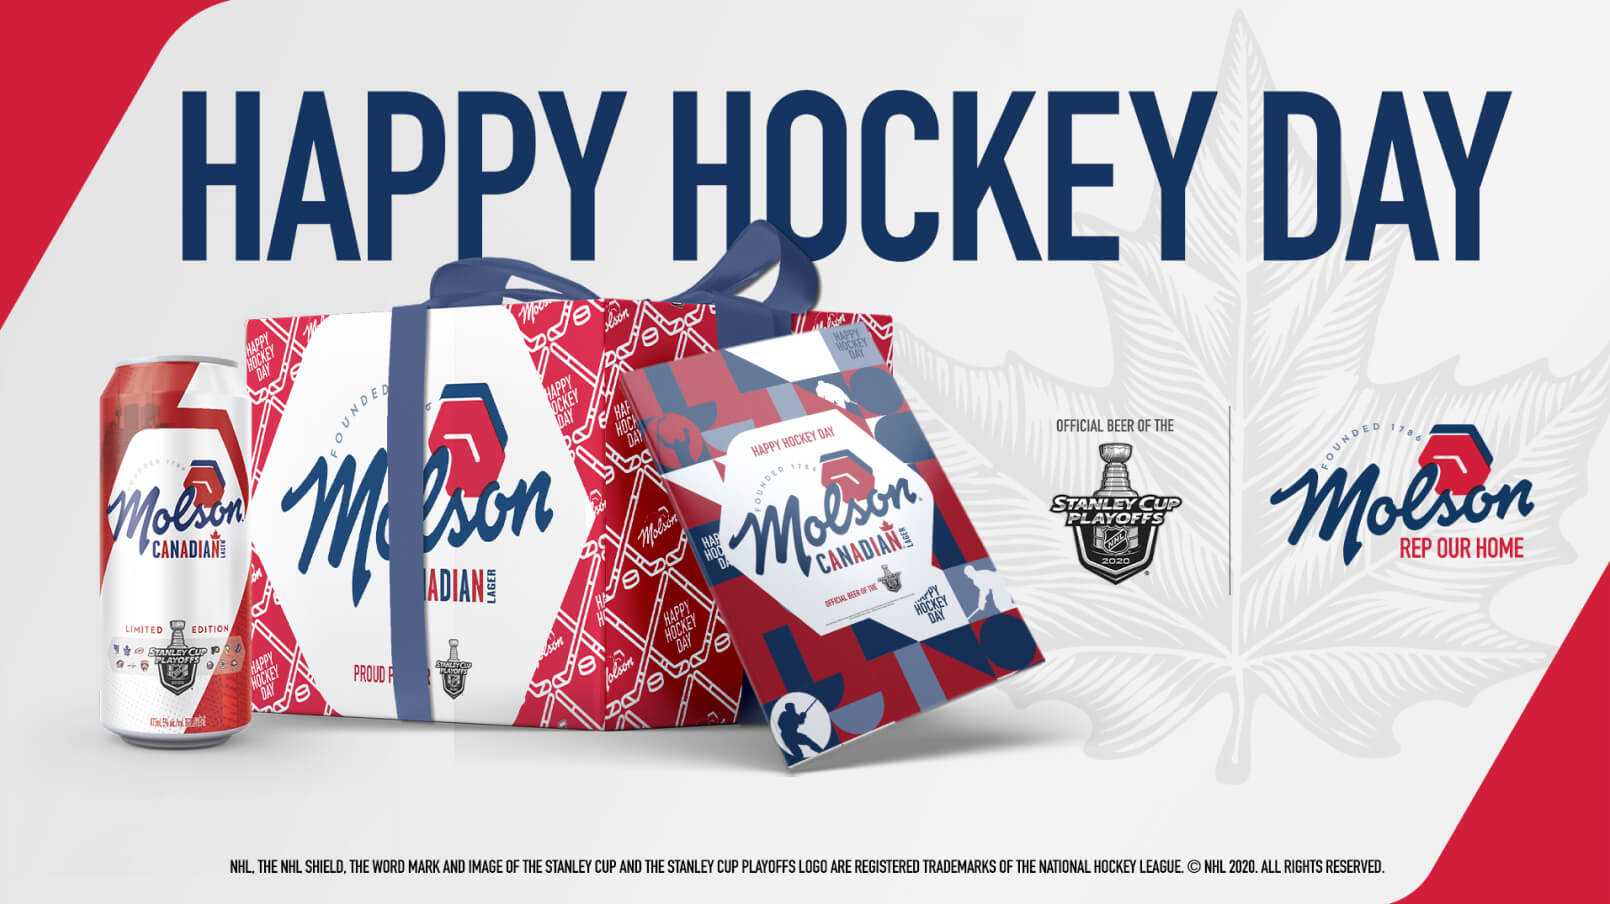 "Happy Hockey Day" Molson gift pack